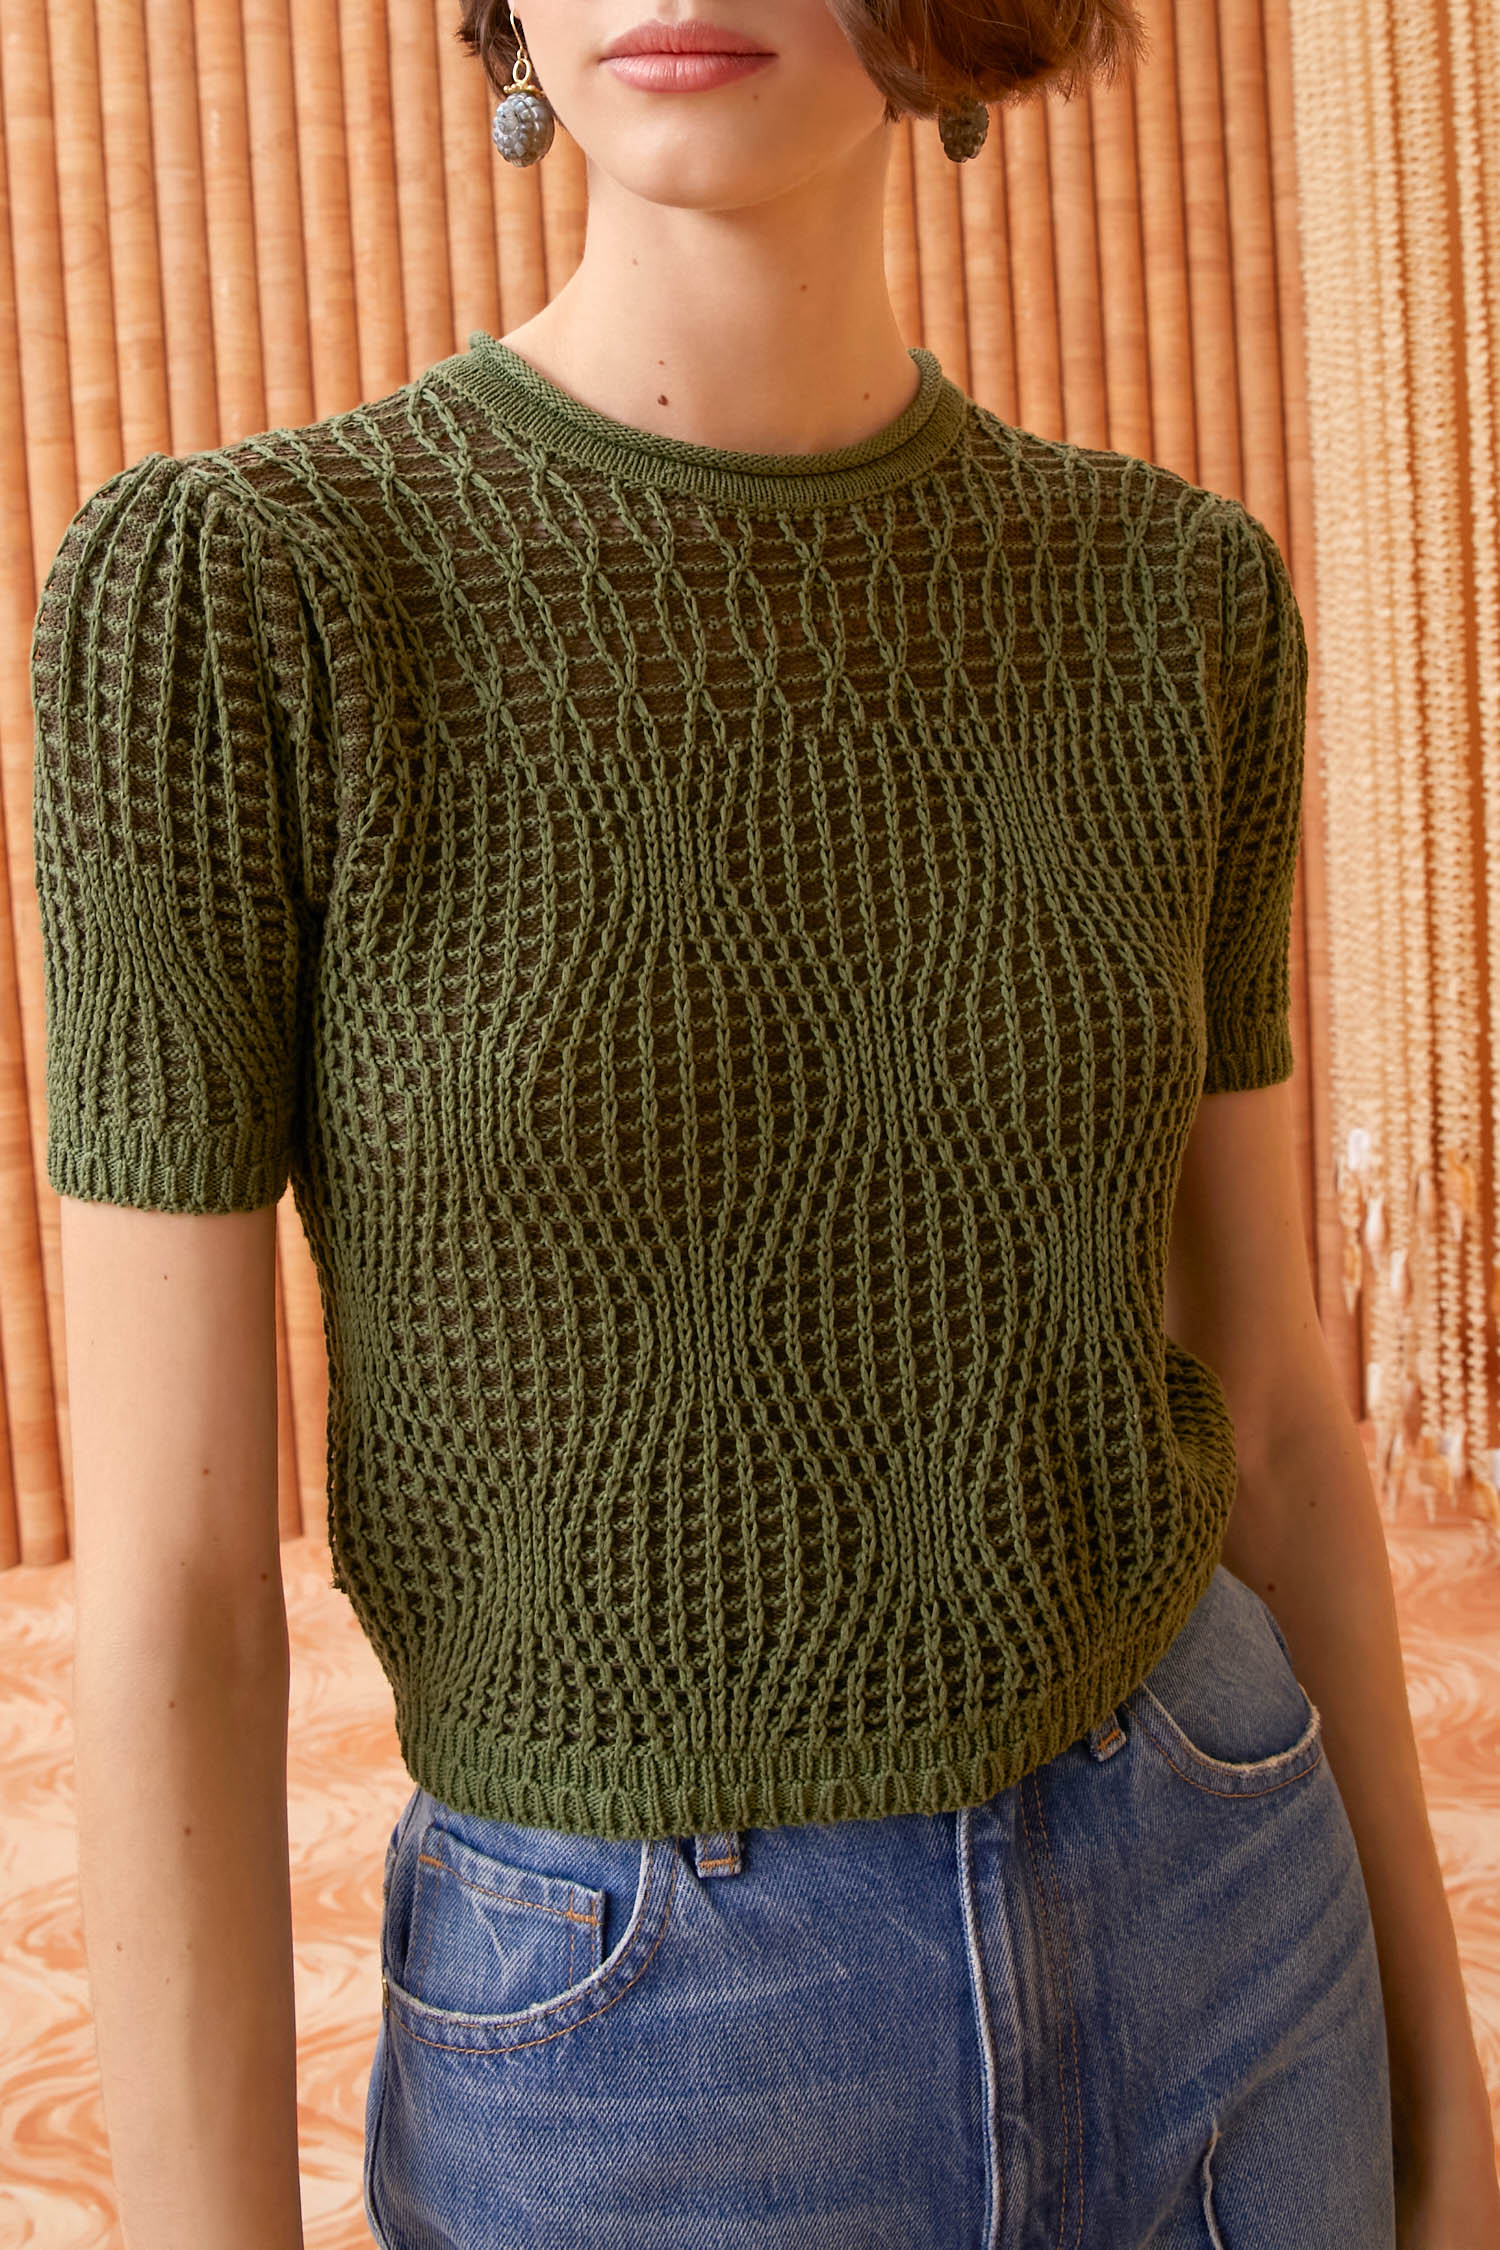 Capri Top - Juniper Green Cotton Knitted Sweater - Ulla Johnson